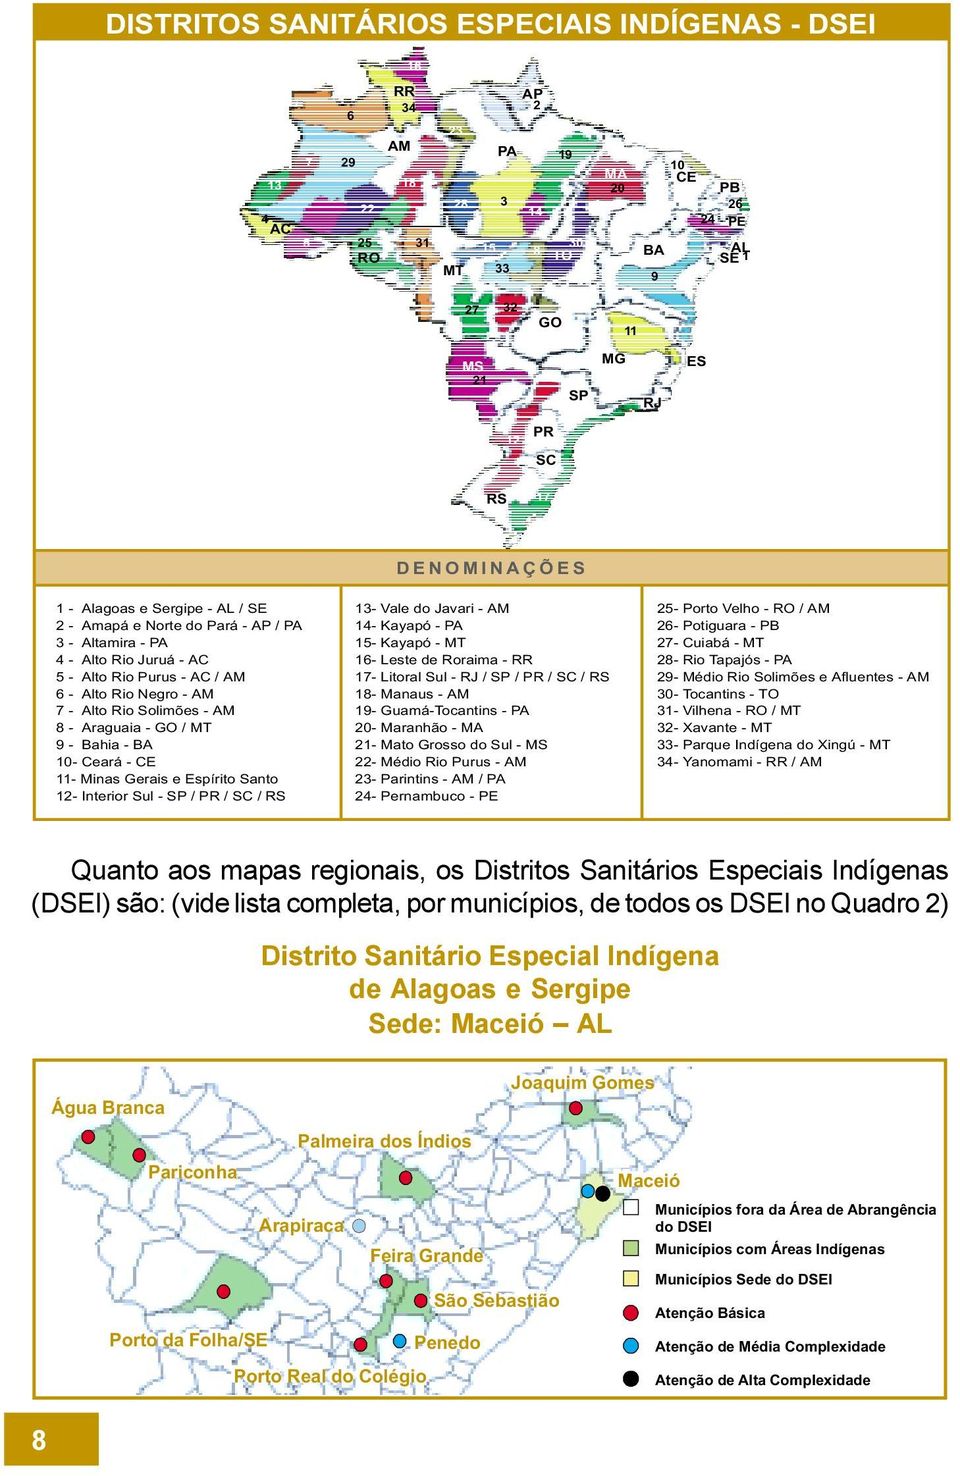 / MT 9 - Bahia - BA 0- Ceará - CE - Minas Gerais e Espírito Santo -InteriorSul-SP/PR/SC/RS 3- Vale do Javari - AM 4- Kayapó - PA 5- Kayapó - MT 6- Leste de Roraima - RR 7-LitoralSul-RJ/SP/PR/SC/RS 8-